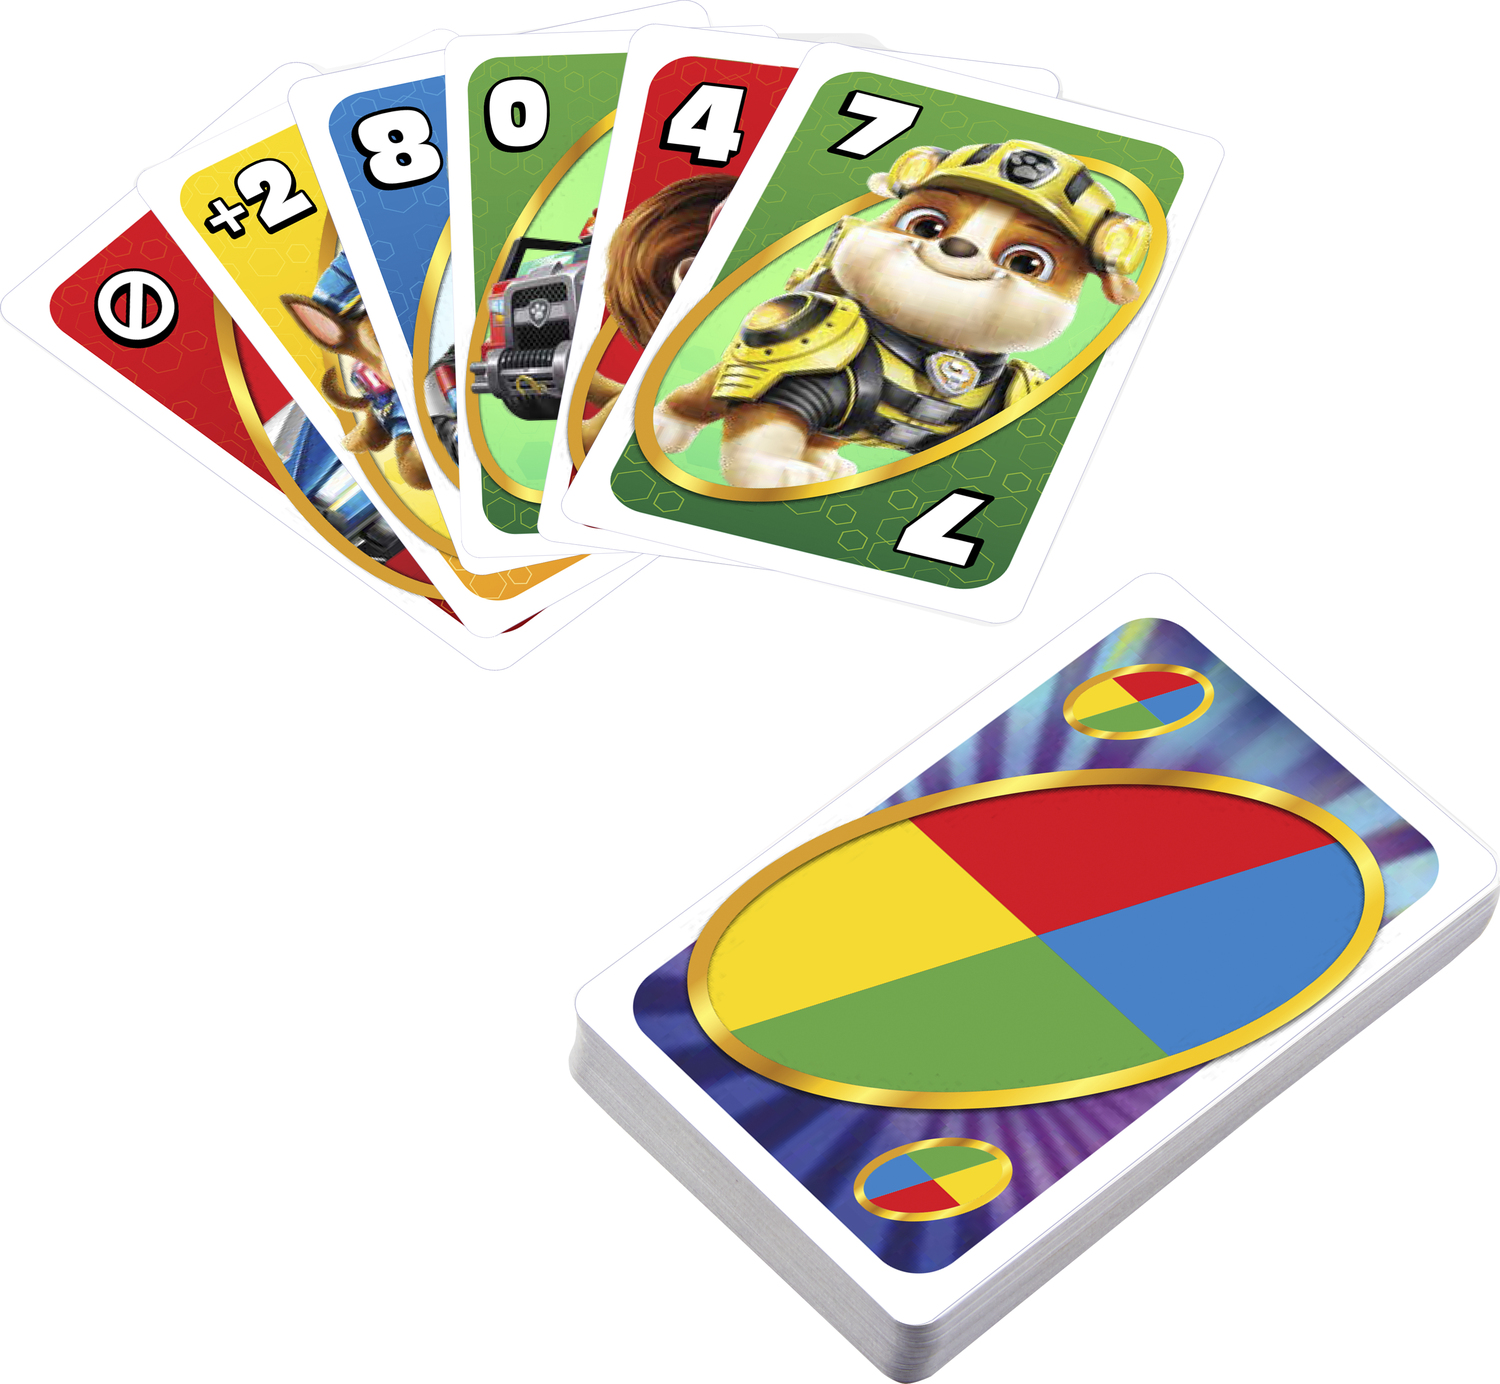 UNO Junior Paw Patrol Card Game Shedding - Imagine That Toys